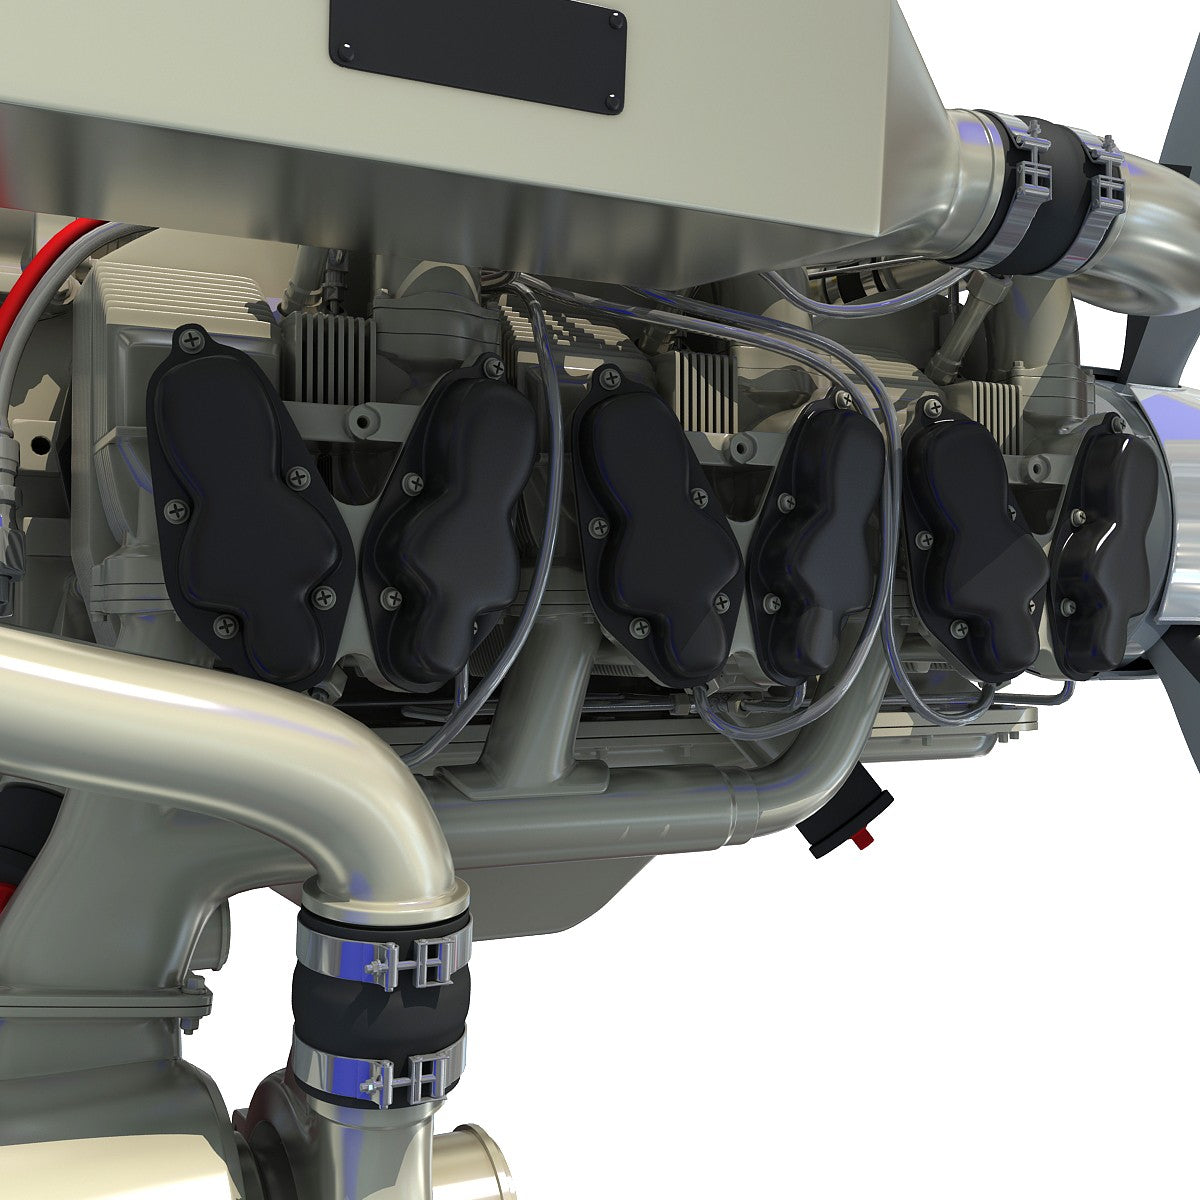 Aircraft Engine 3D Models